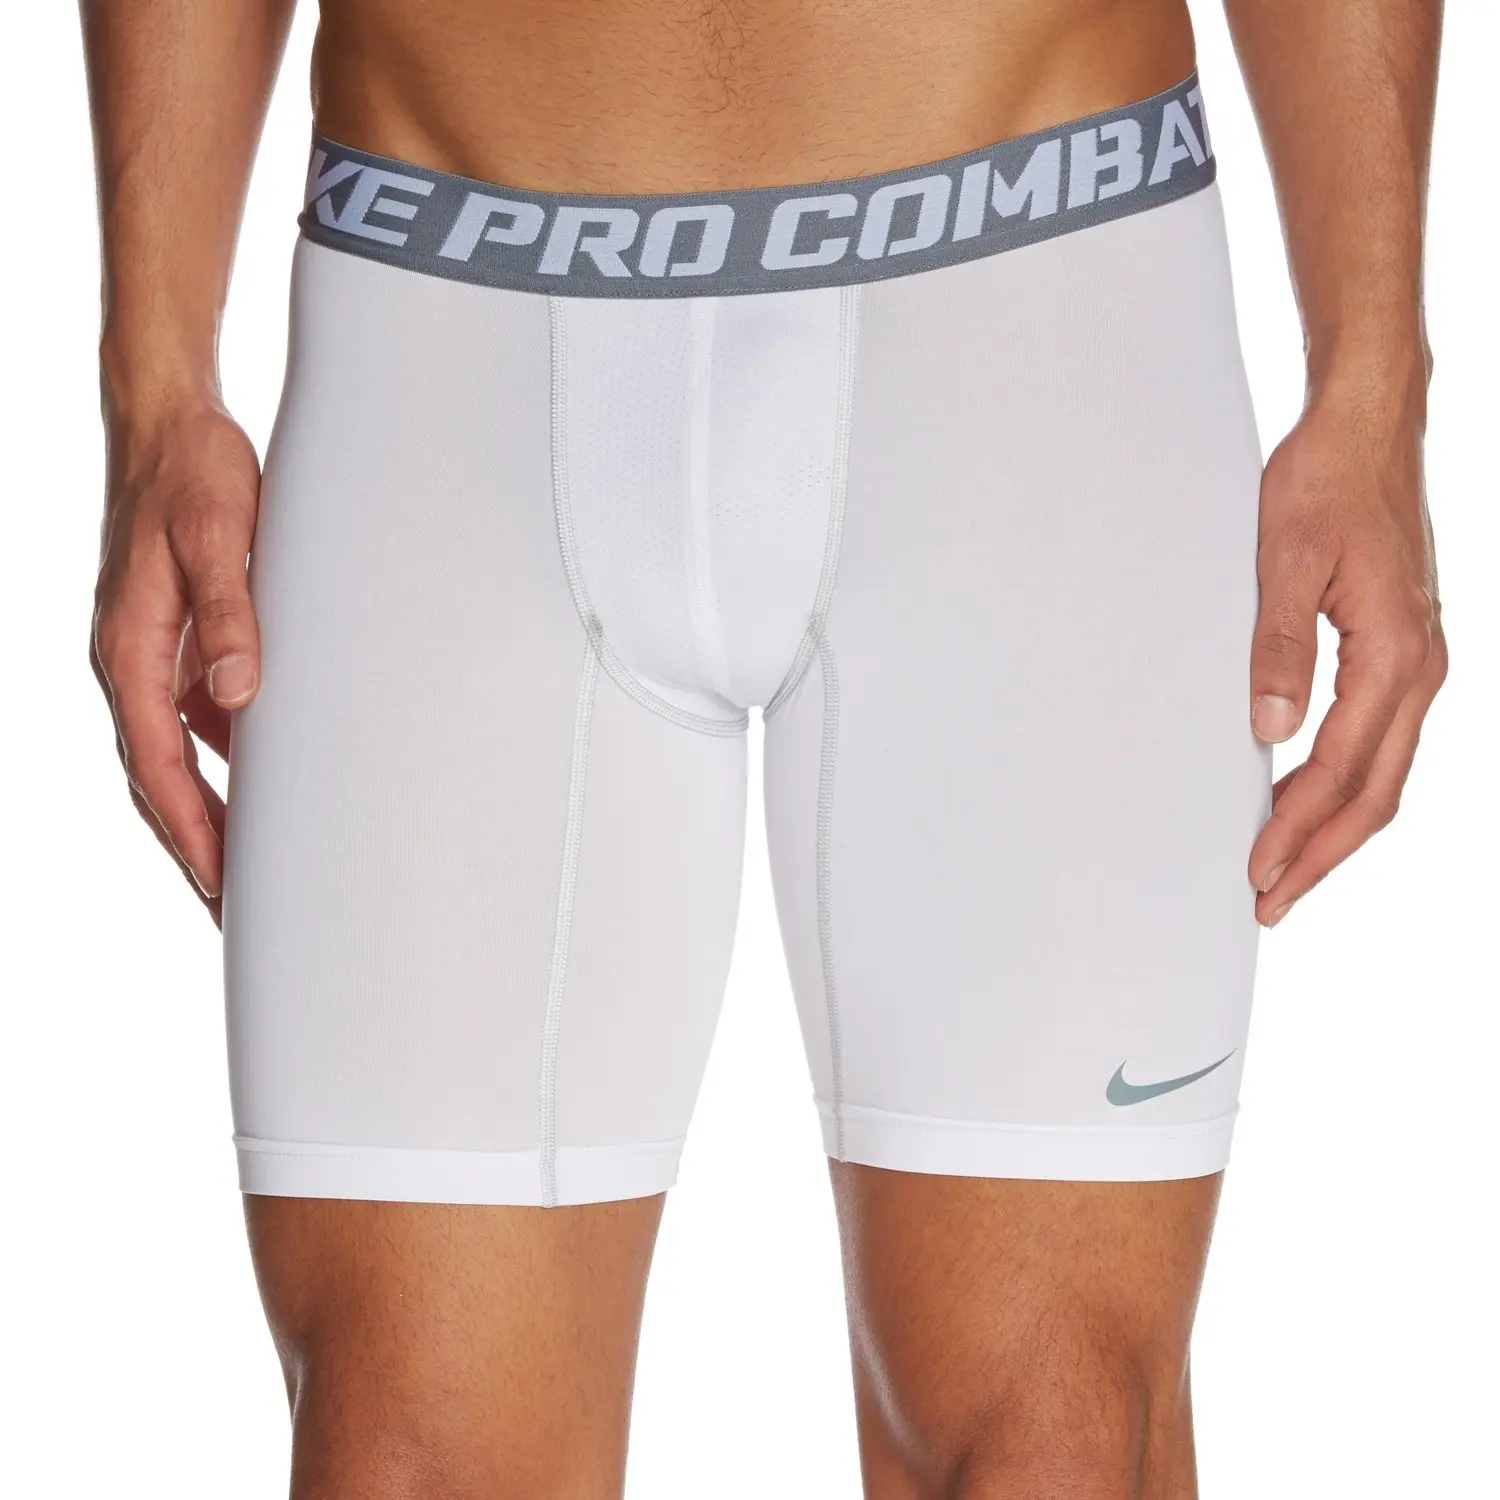 nike pro combat compression shorts